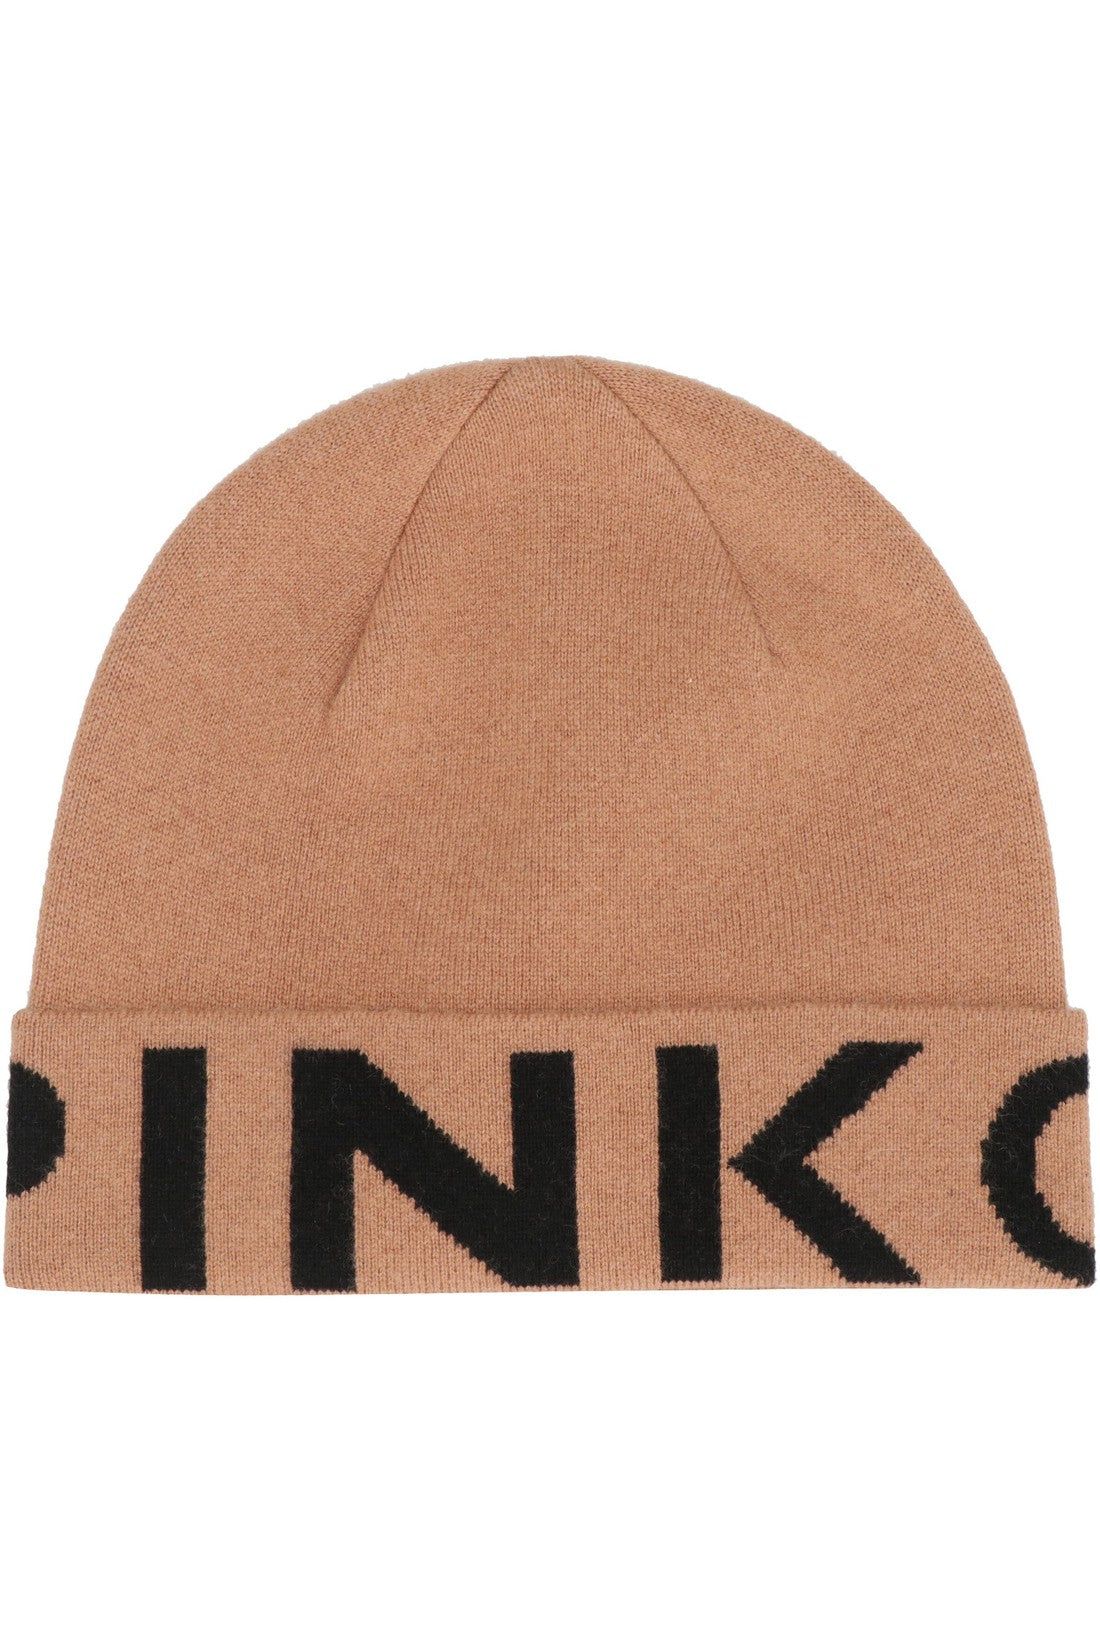 Pinko-OUTLET-SALE-Calamaro wool hat-ARCHIVIST